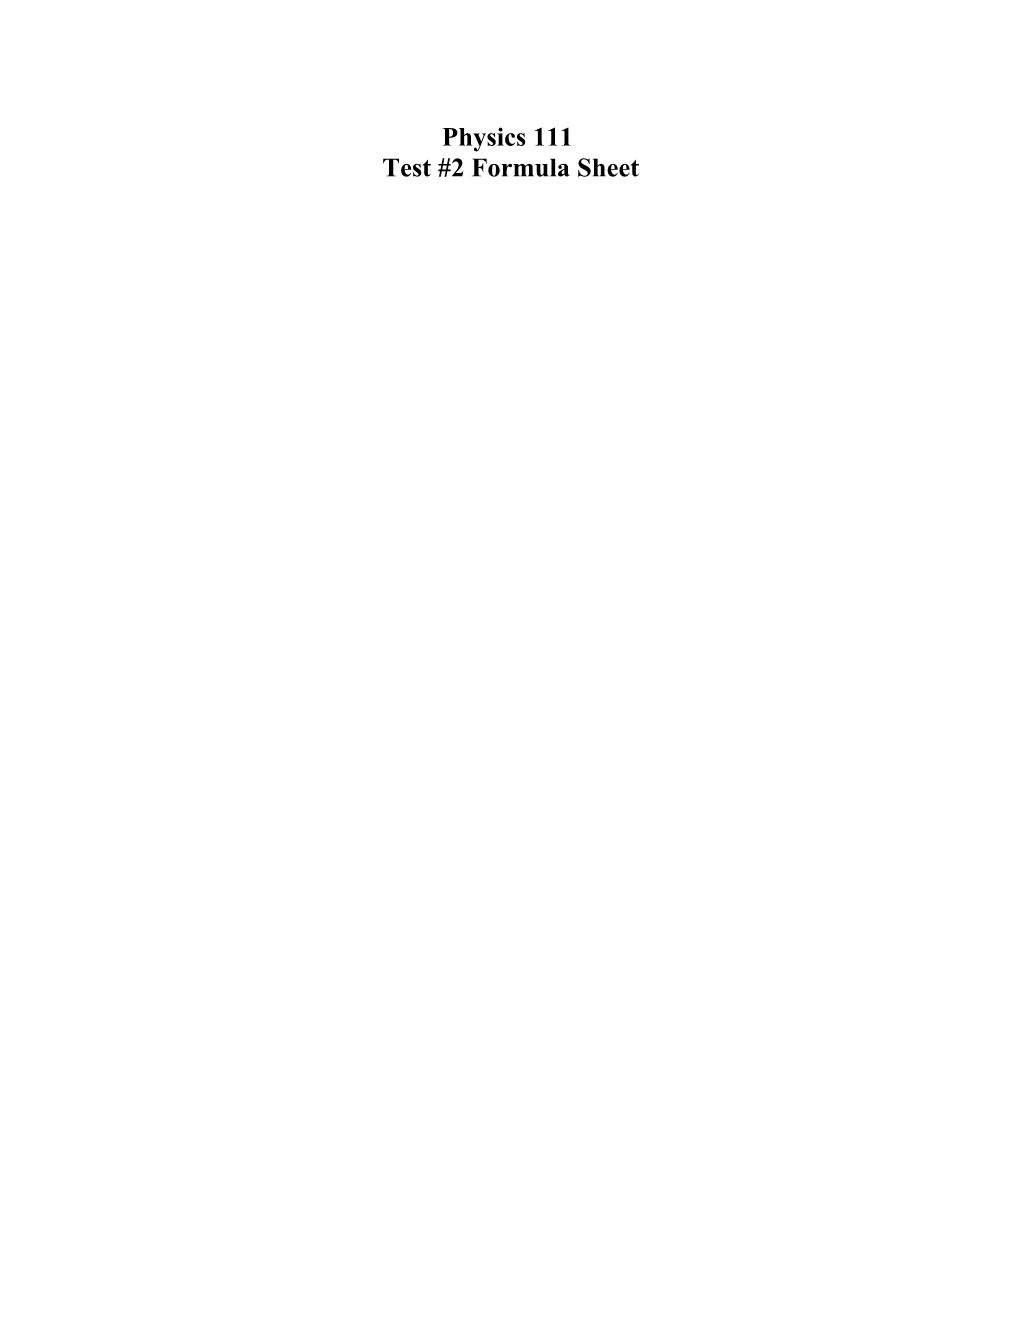 Test #2 Formula Sheet